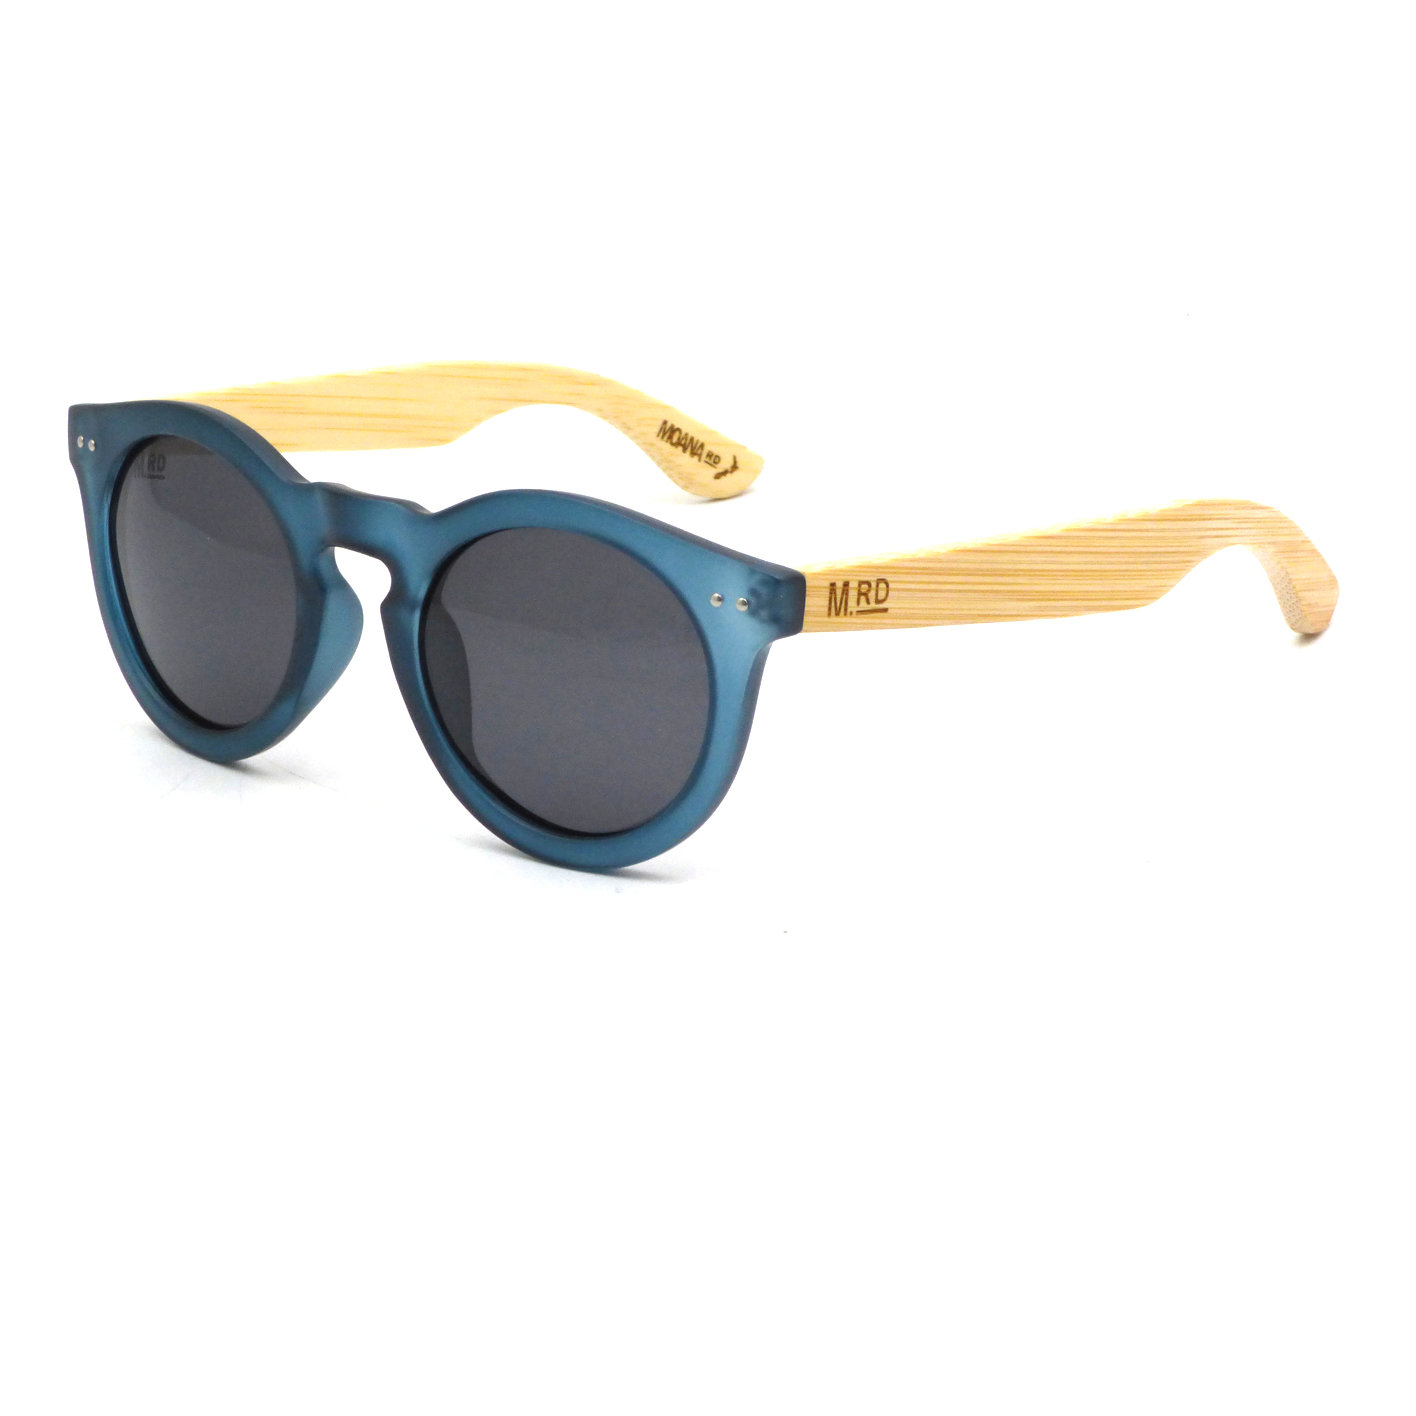 Moana Road Grace Kelly Denim & Wood Sunglasses